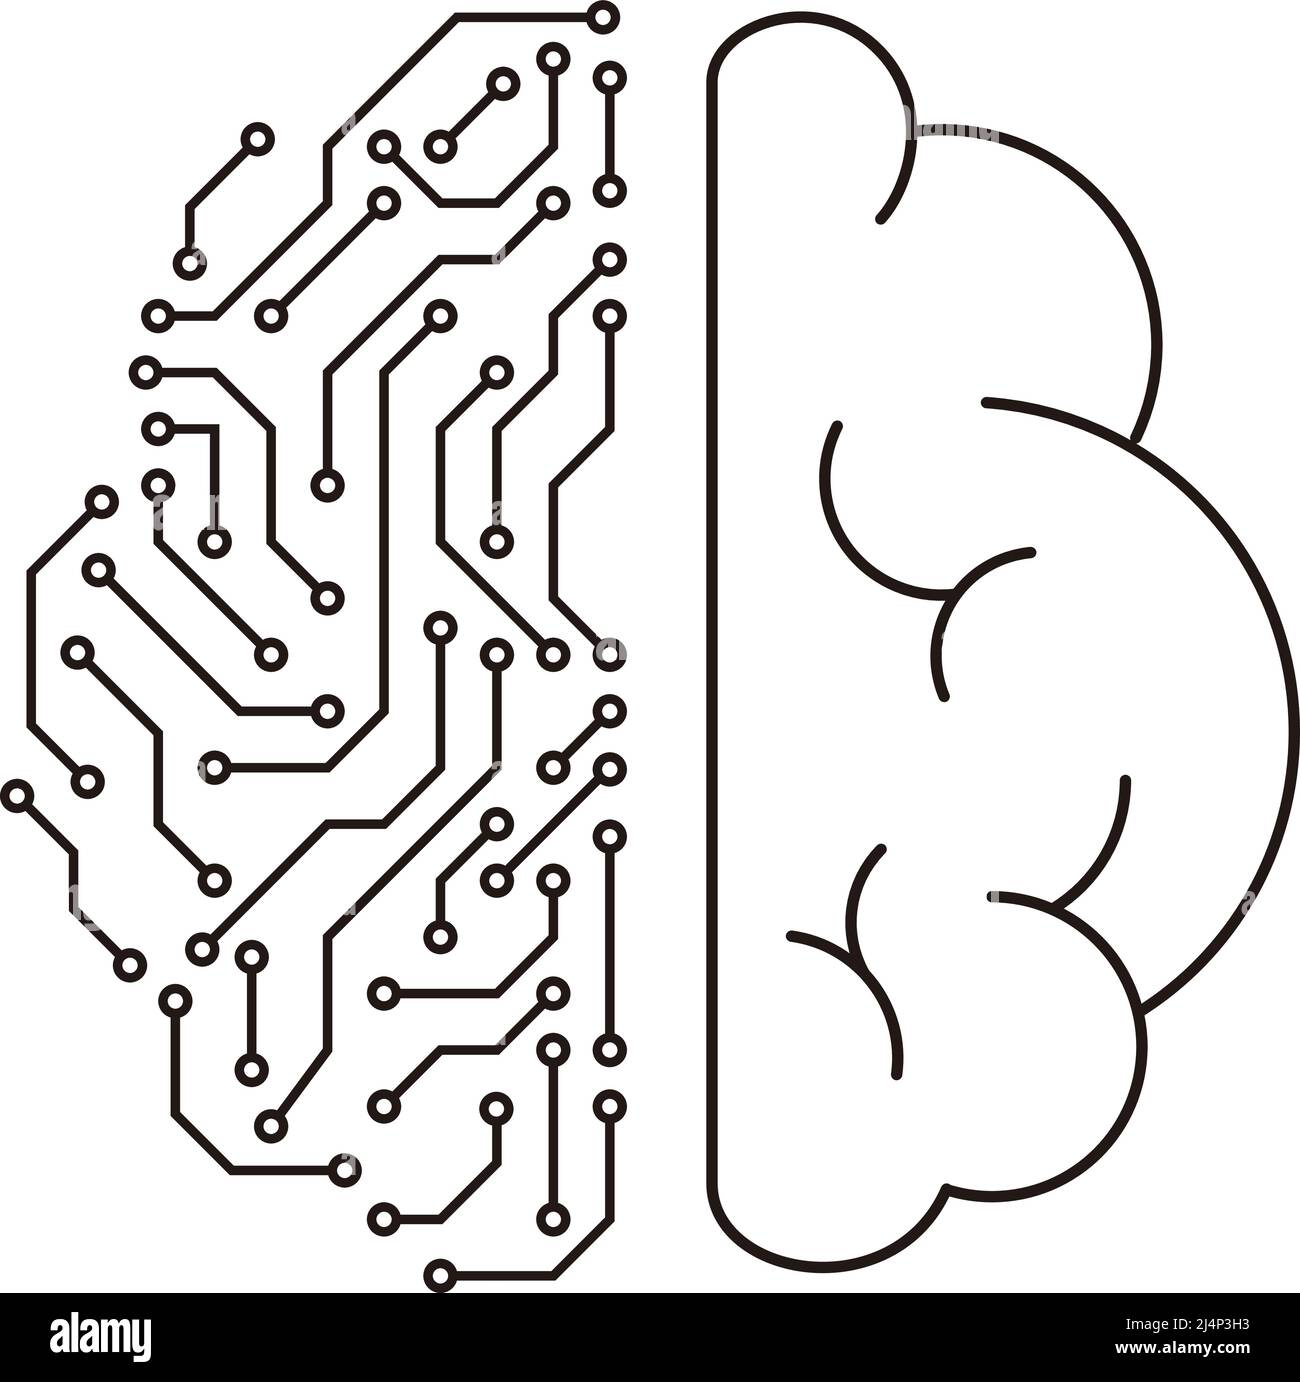 Half human brain and half circuit board, Artificial intelligence of digital concept Stock Vector